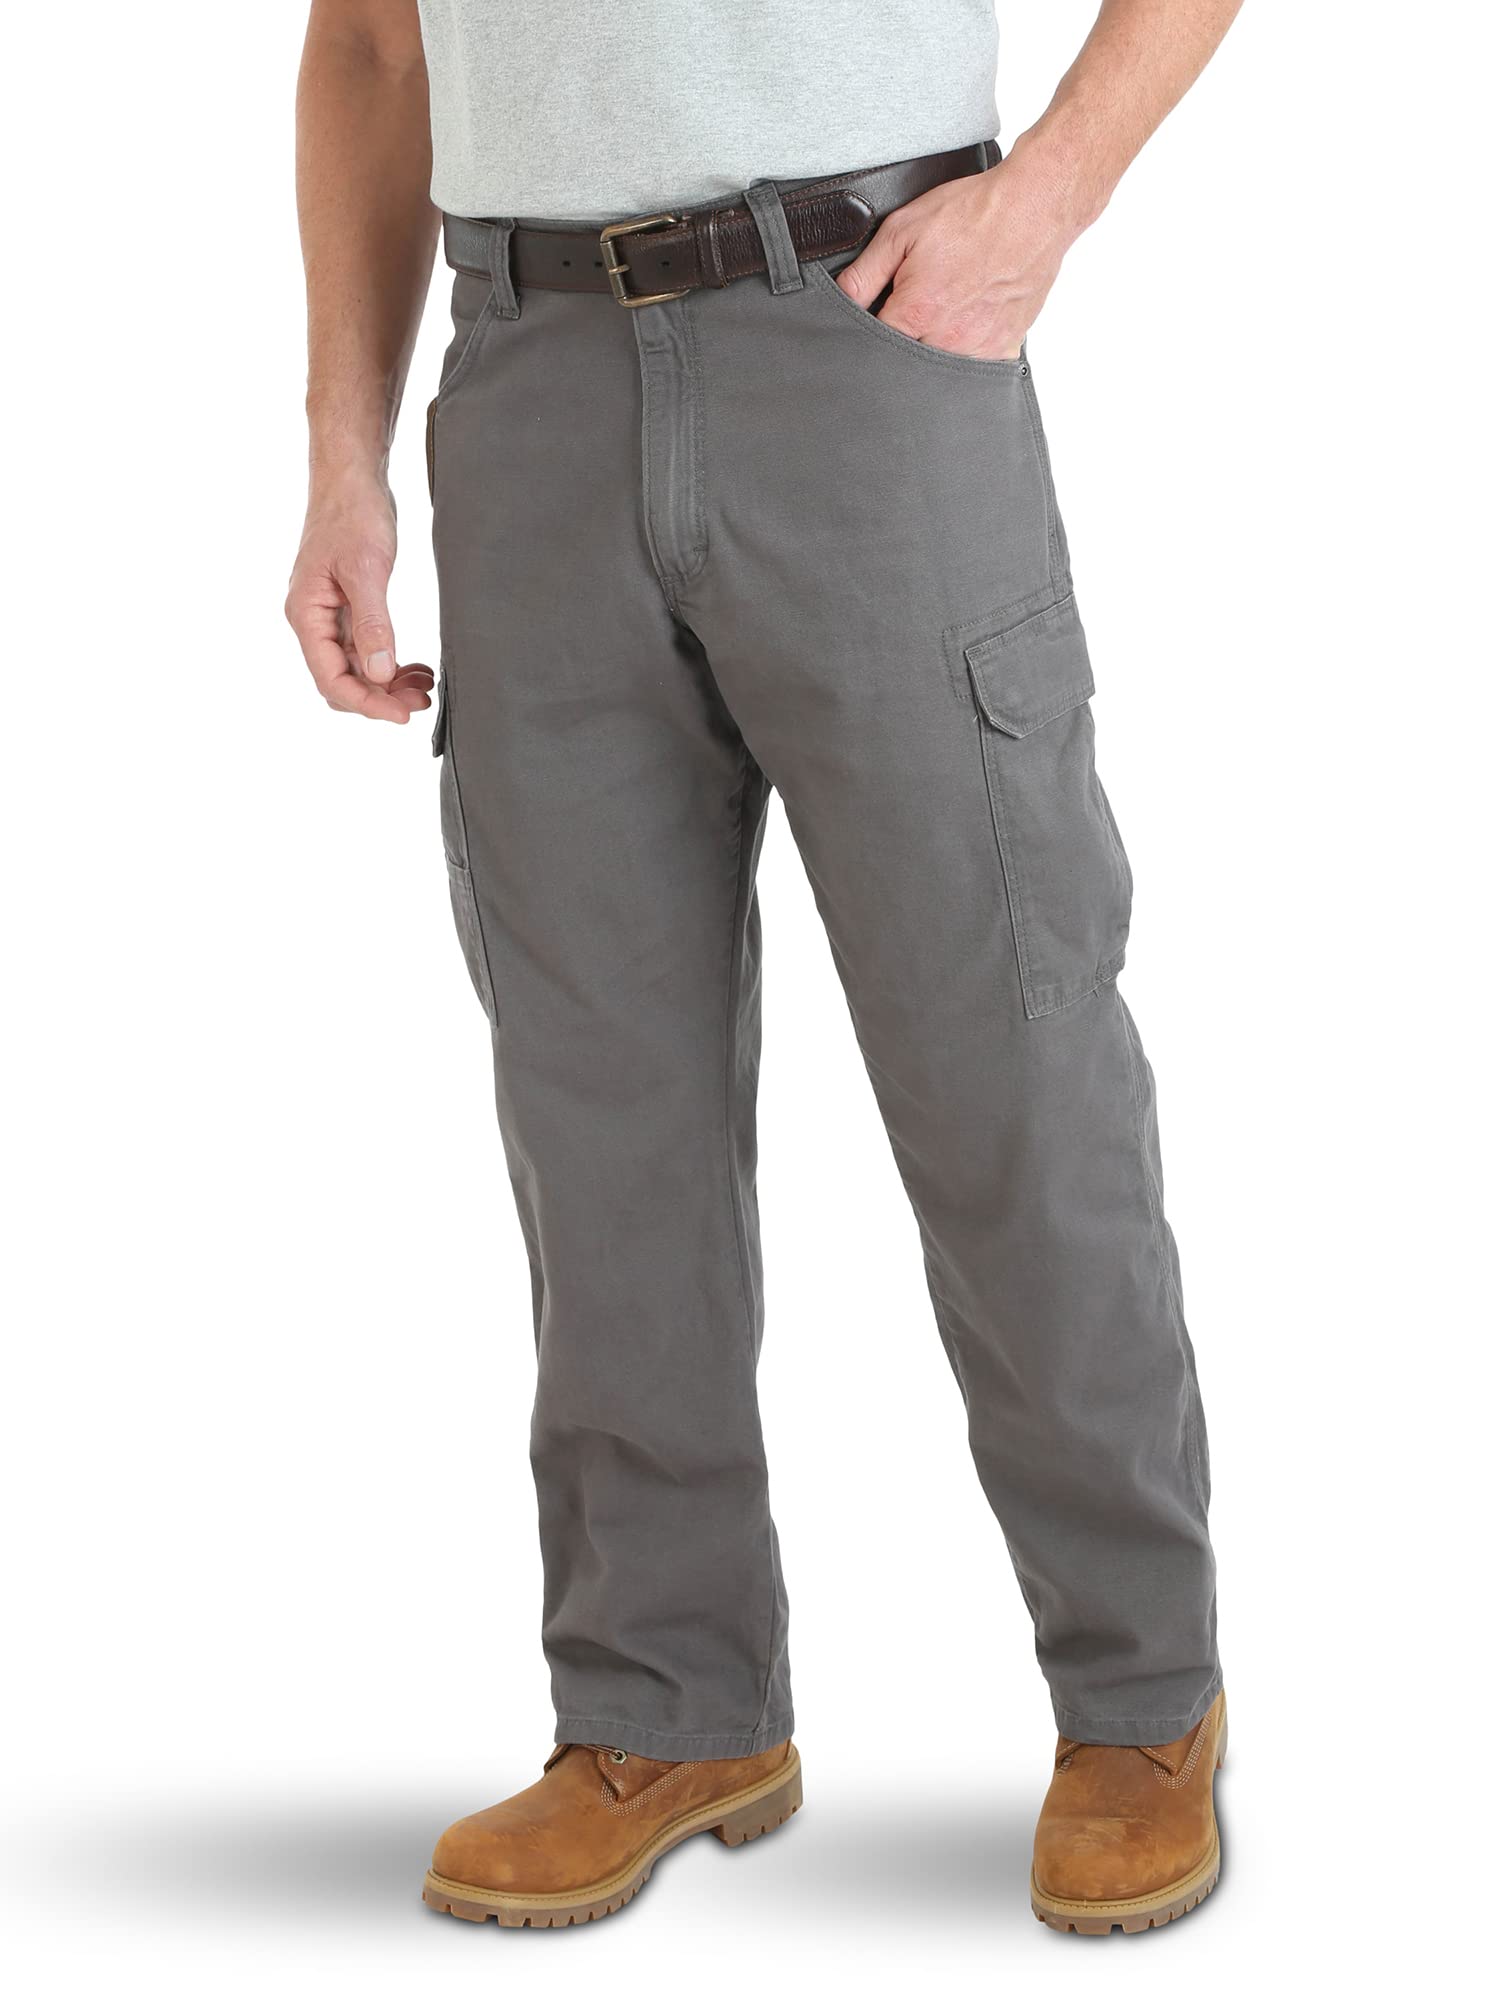 Mua Wrangler Riggs Workwear Men's Advanced Comfort Lightweight Ranger Pant  trên Amazon Mỹ chính hãng 2023 | Giaonhan247